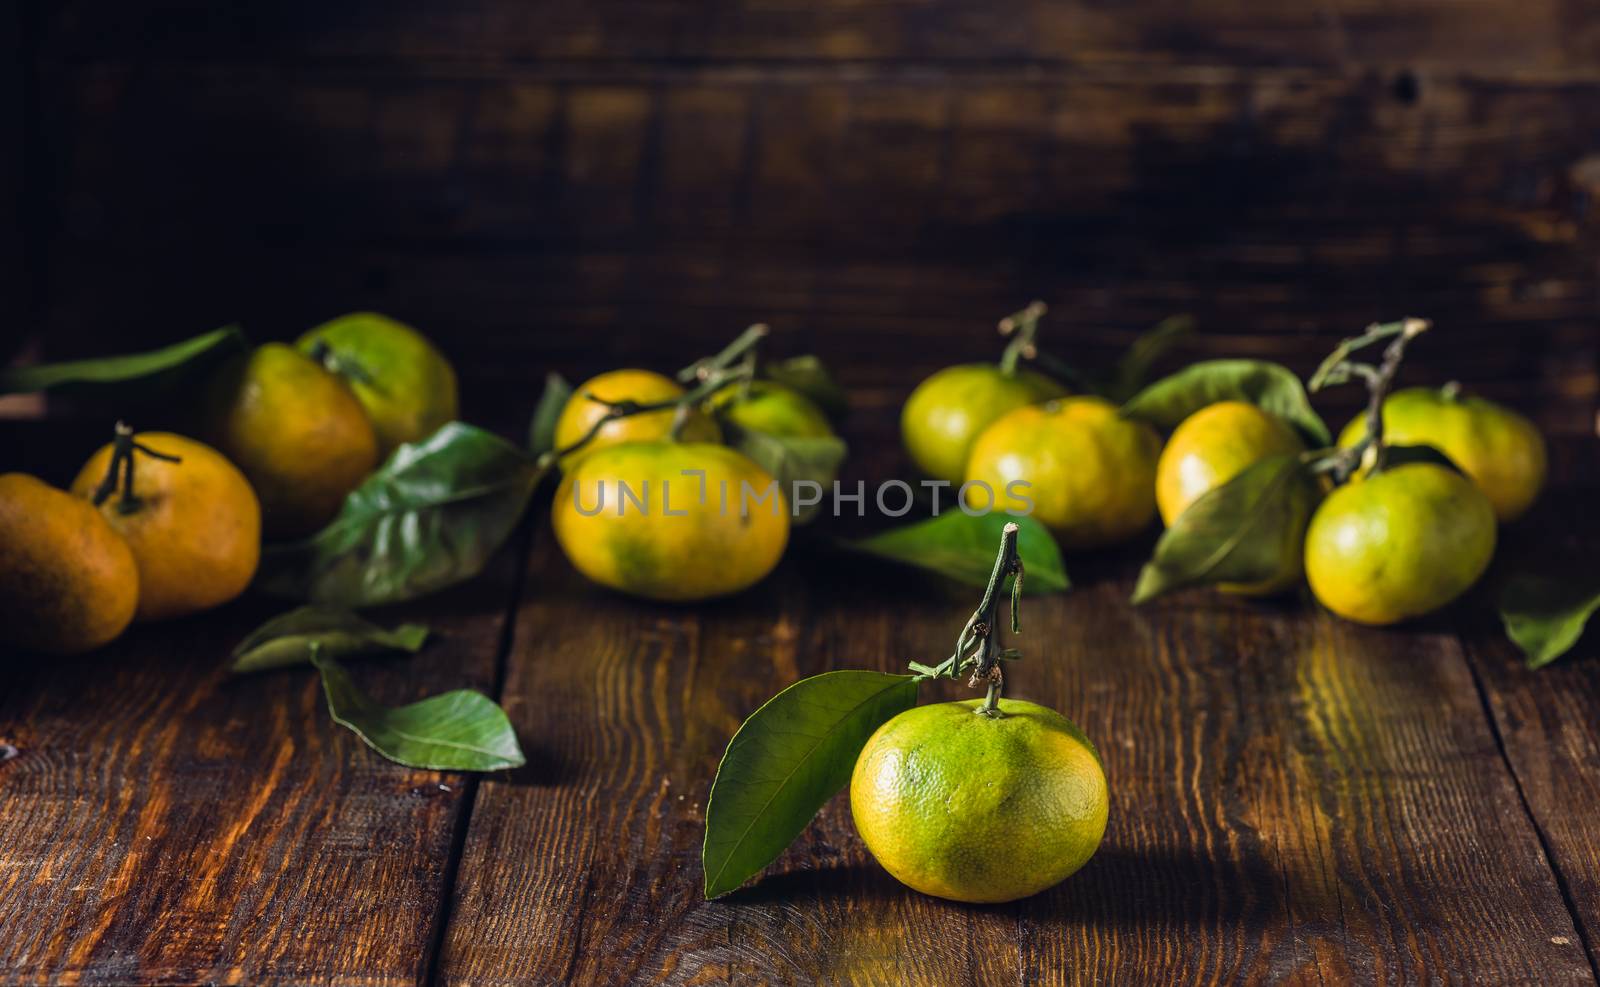 Tangerines with Leaves by Seva_blsv